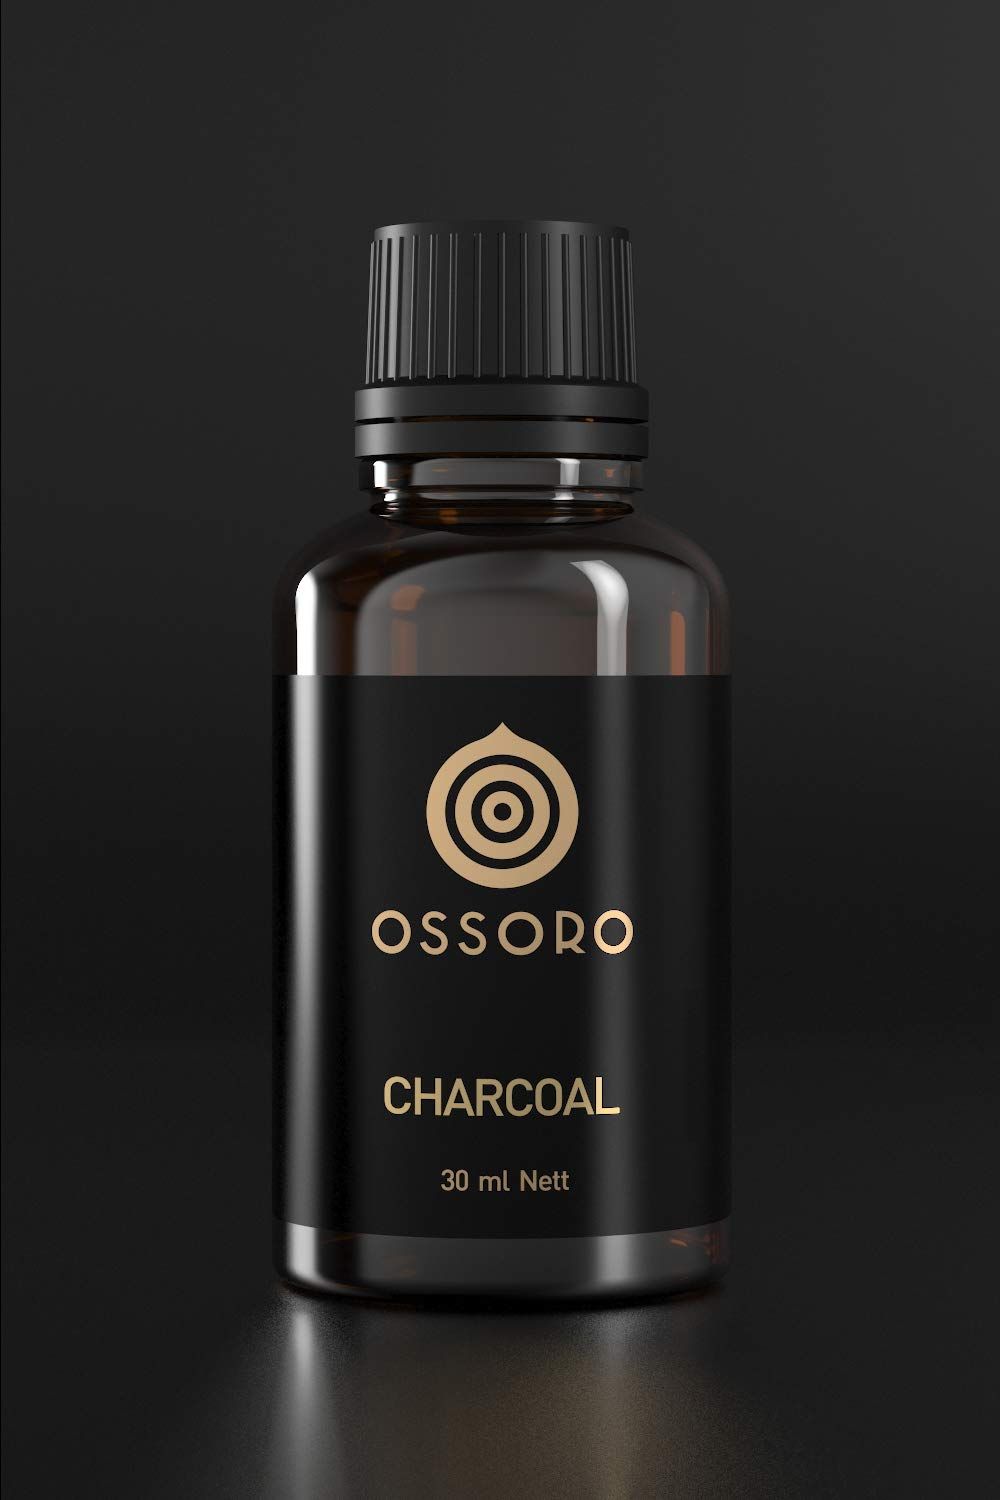 Ossoro Charcoal Essence Image